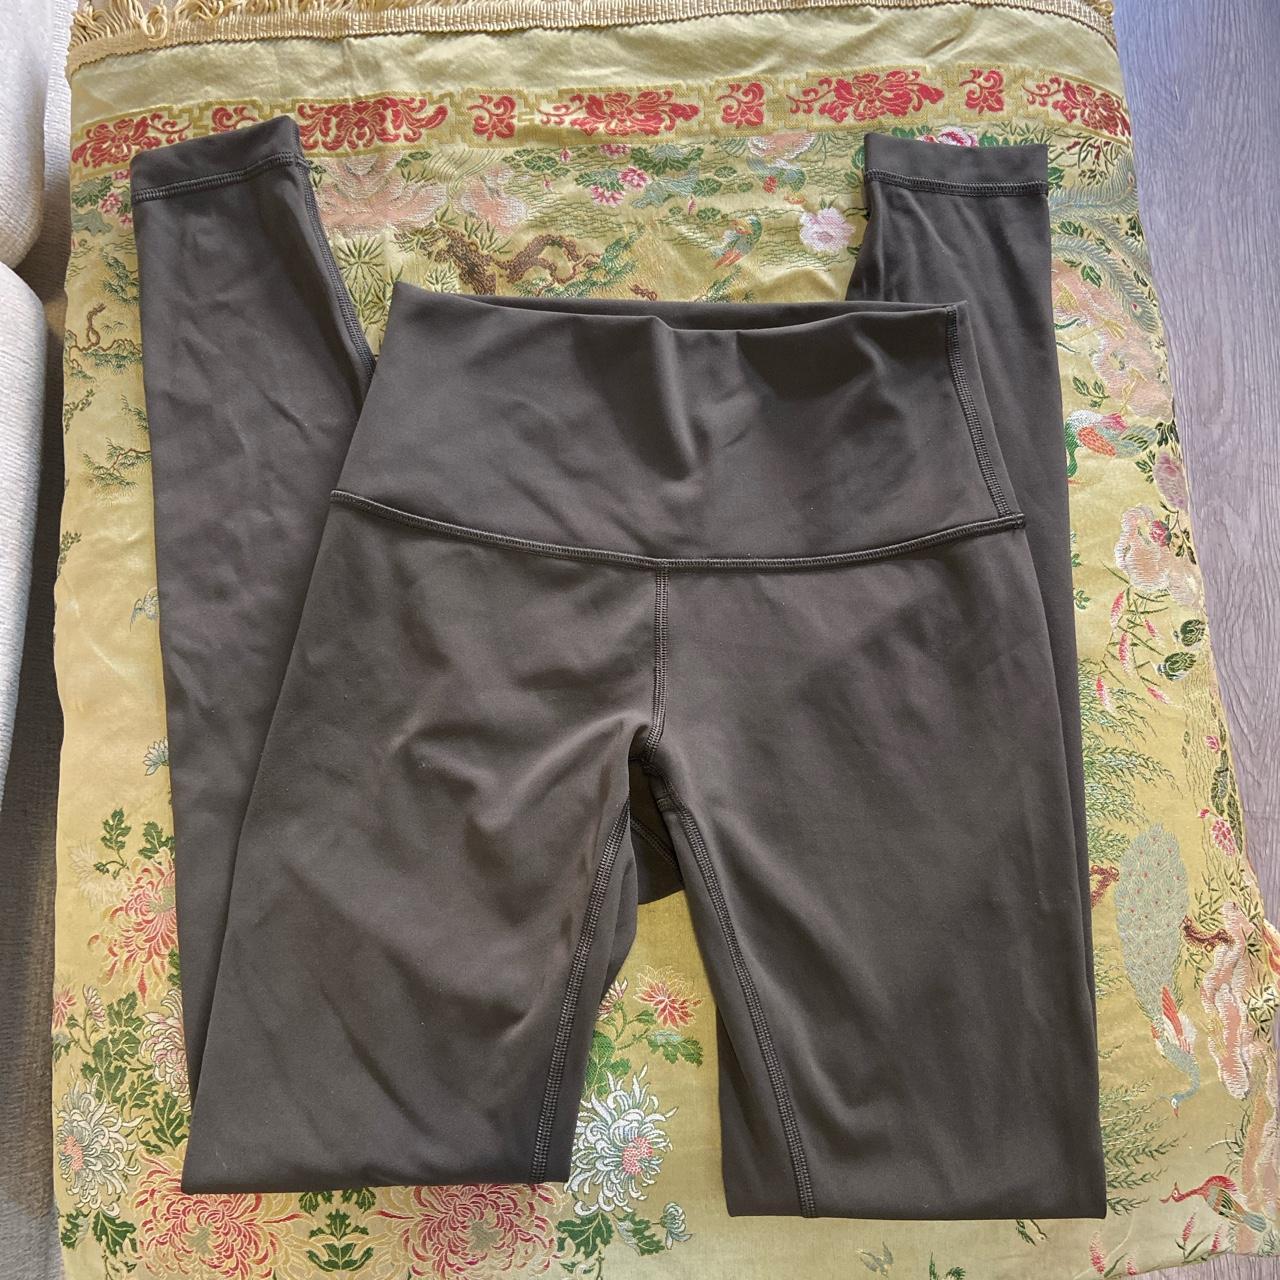 Army green luon leggings size 4 #lululemon - Depop